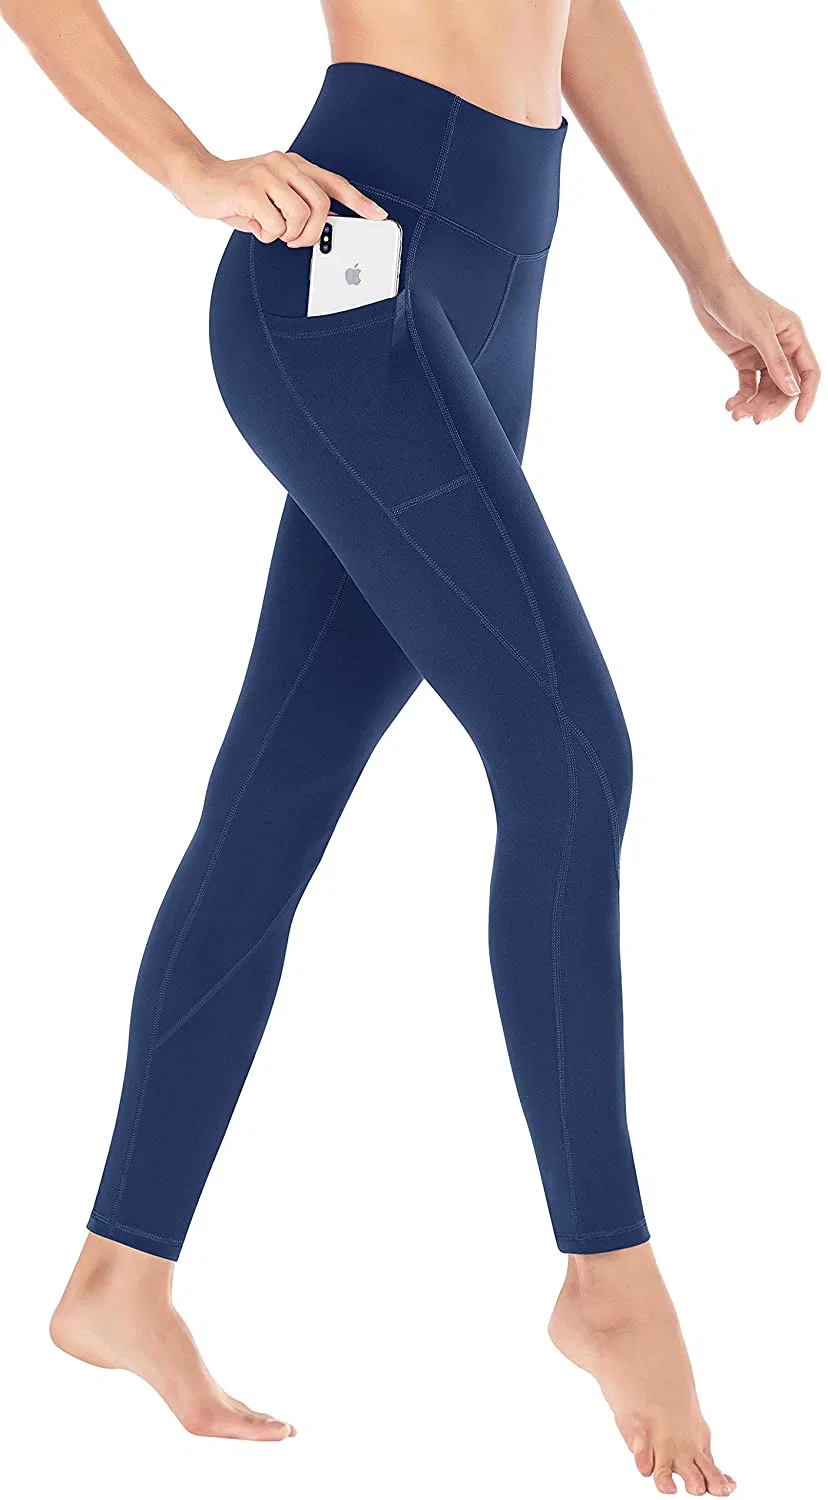 Clothing Legging Sportswear Home Gym Suit Fitness Yoga Wear